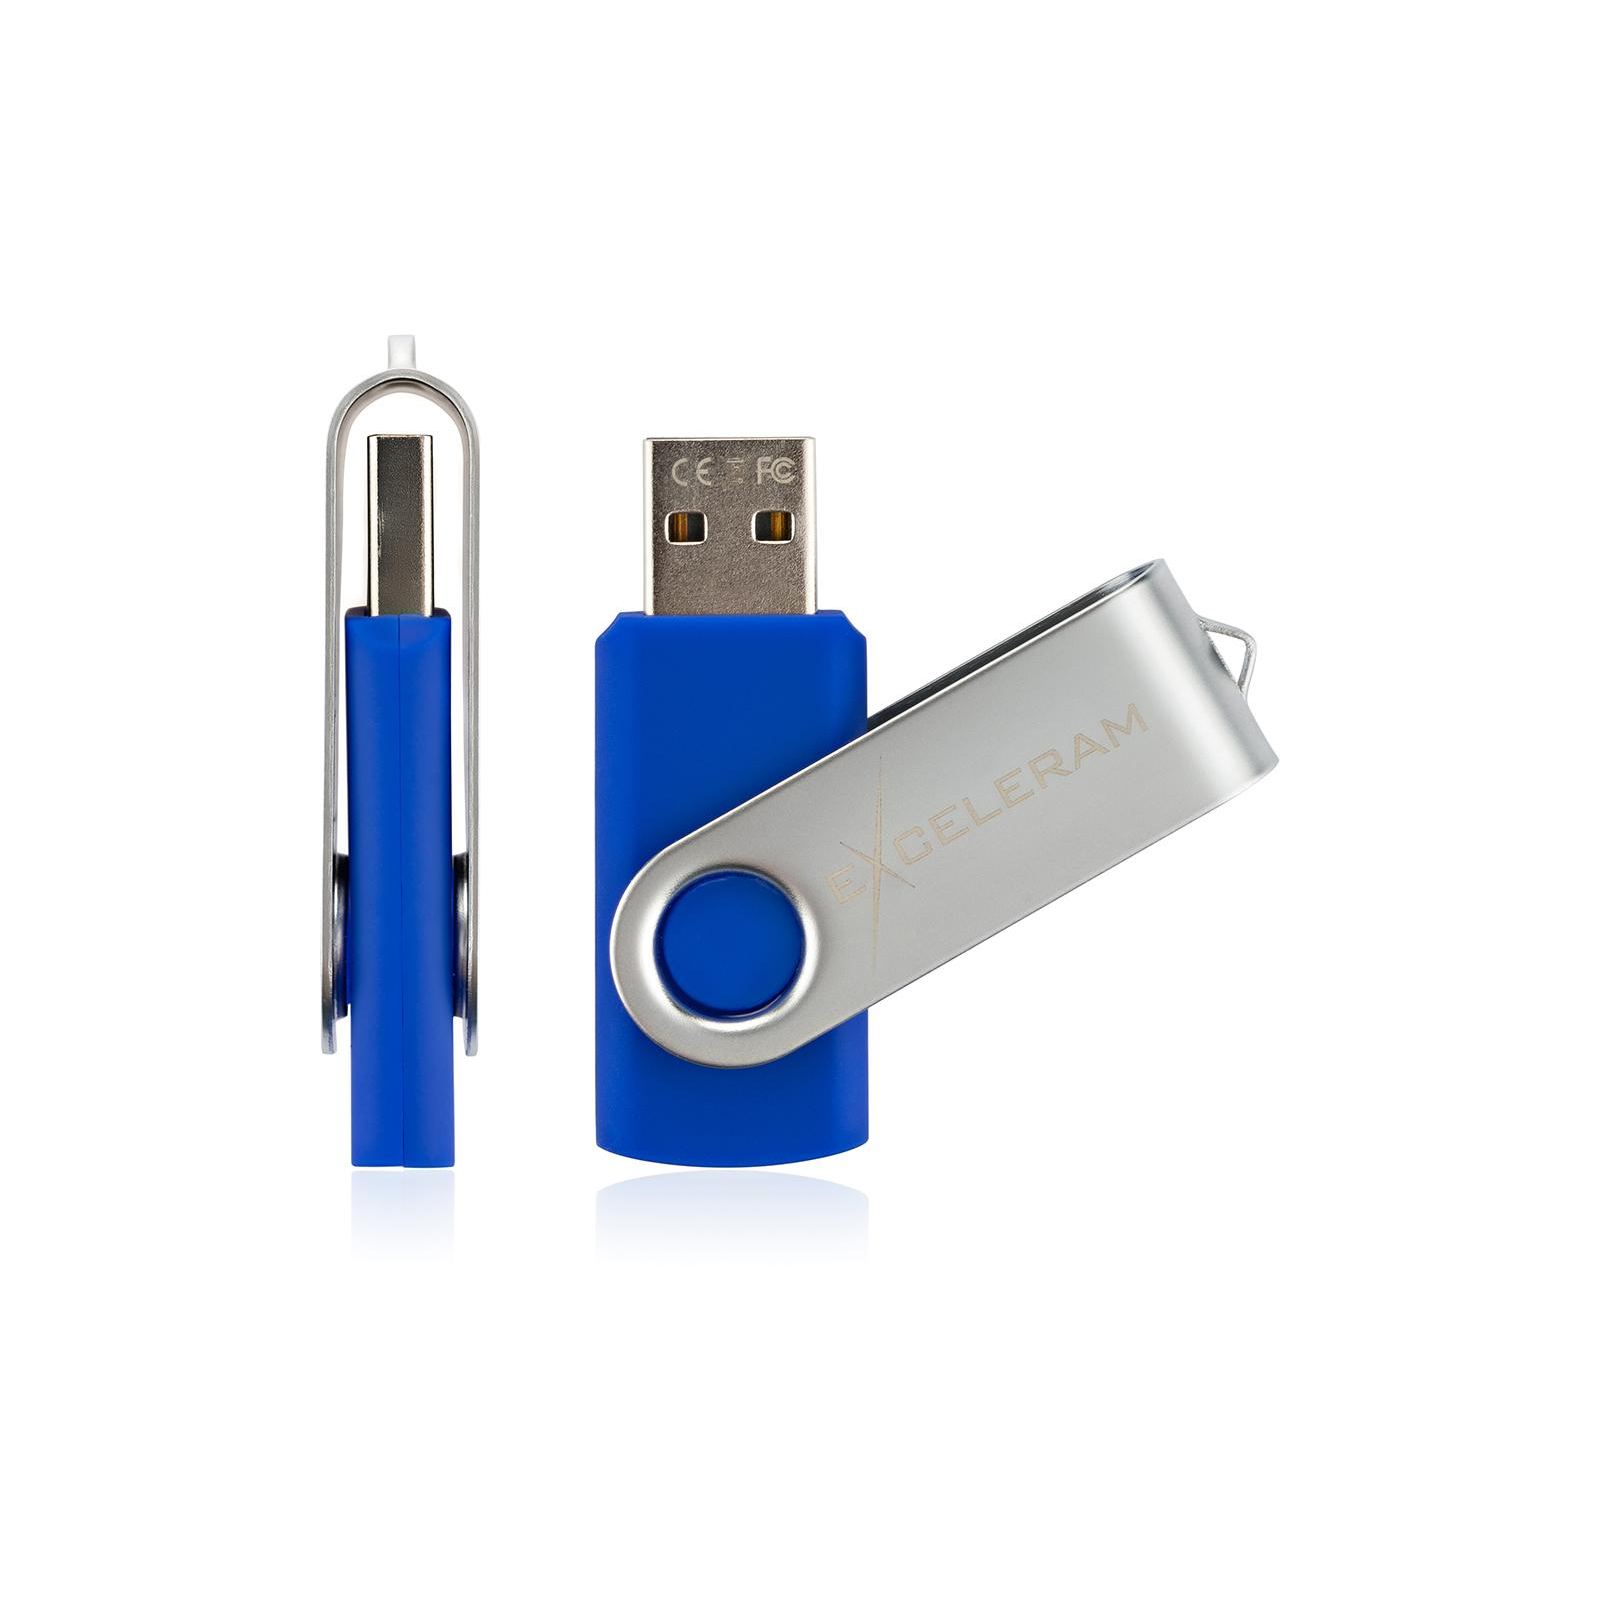 USB флеш накопитель eXceleram 32GB P1 Series Silver/Blue USB 2.0 (EXP1U2SIBL32) изображение 4